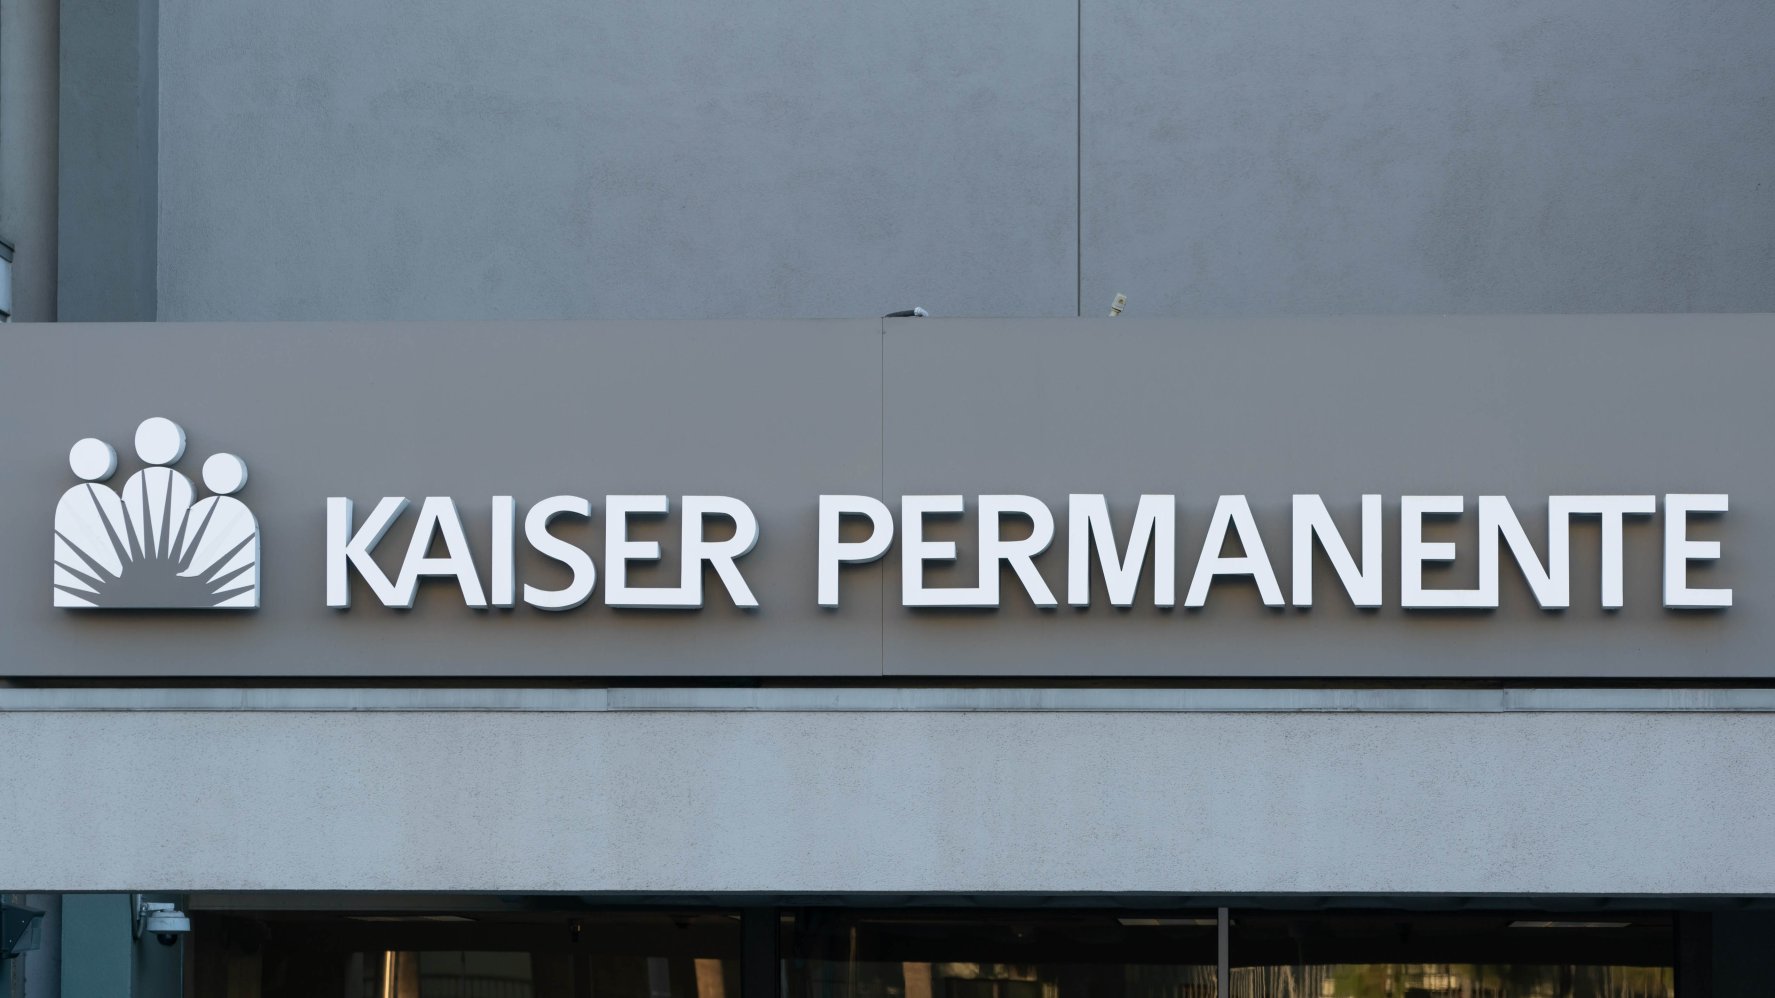 Justice Department Joins Lawsuit Alleging Kaiser Permanente Medicare